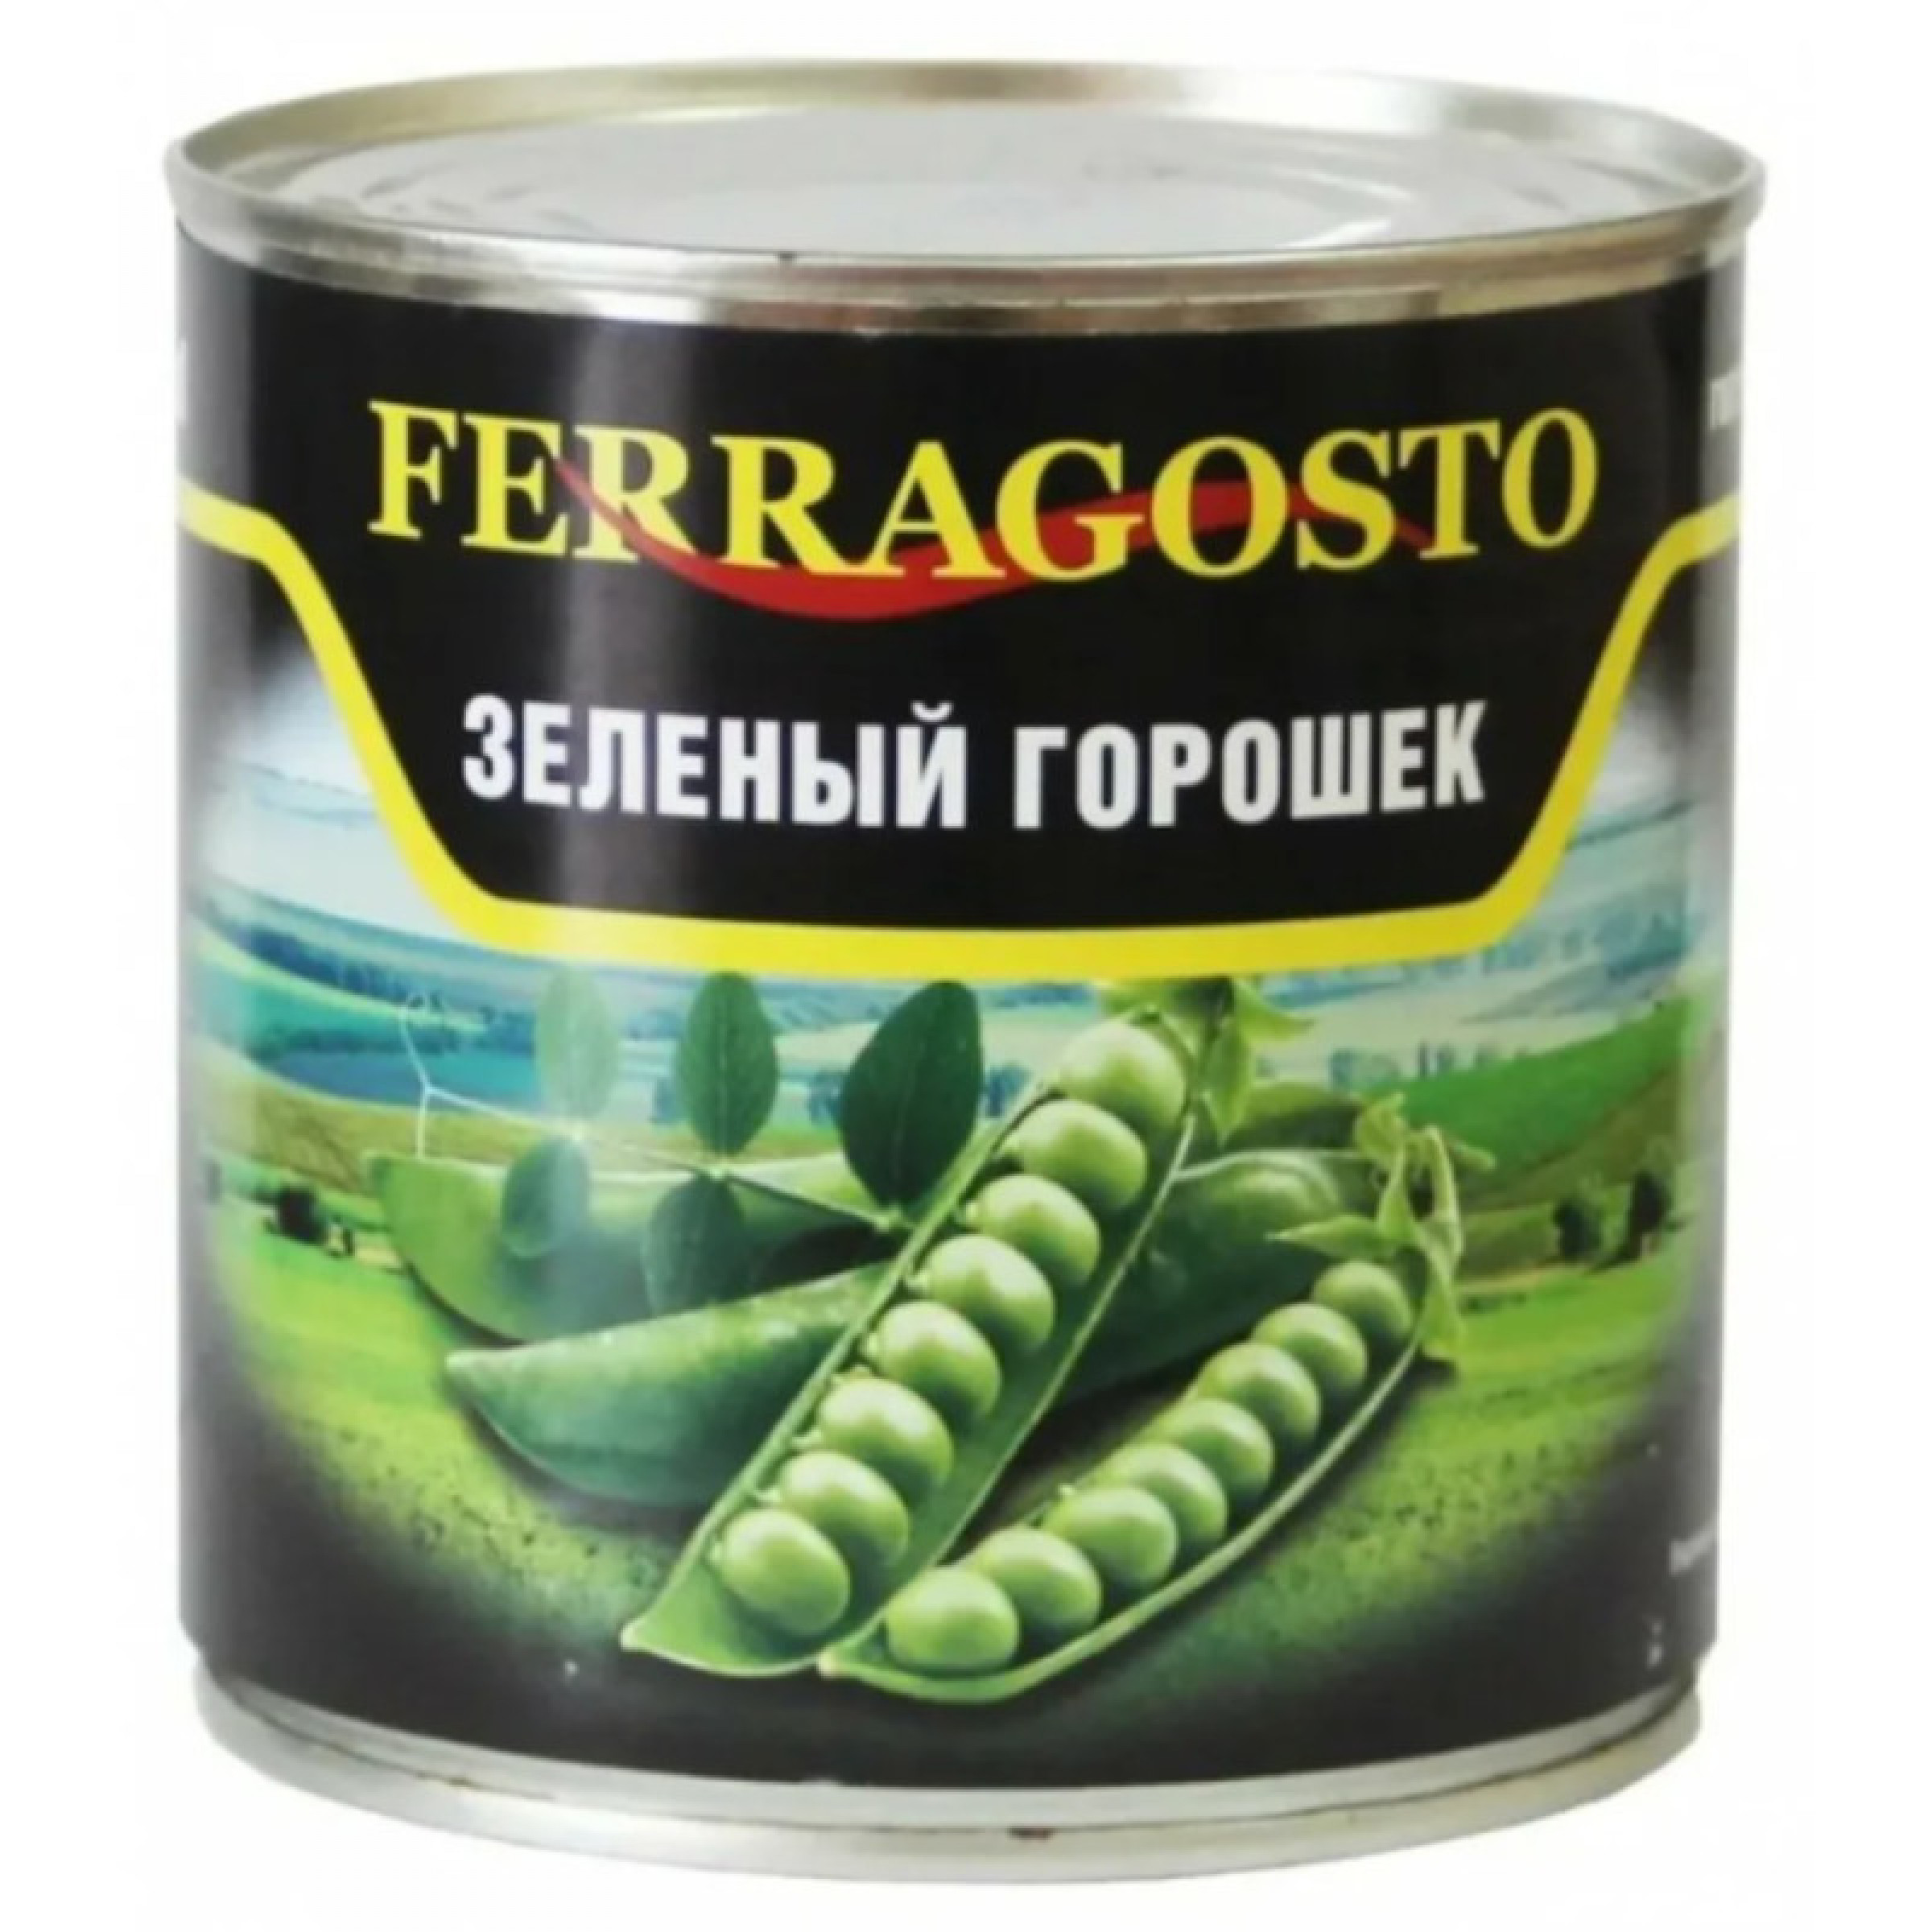 Горошек Ferragosto зеленый, 425 мл